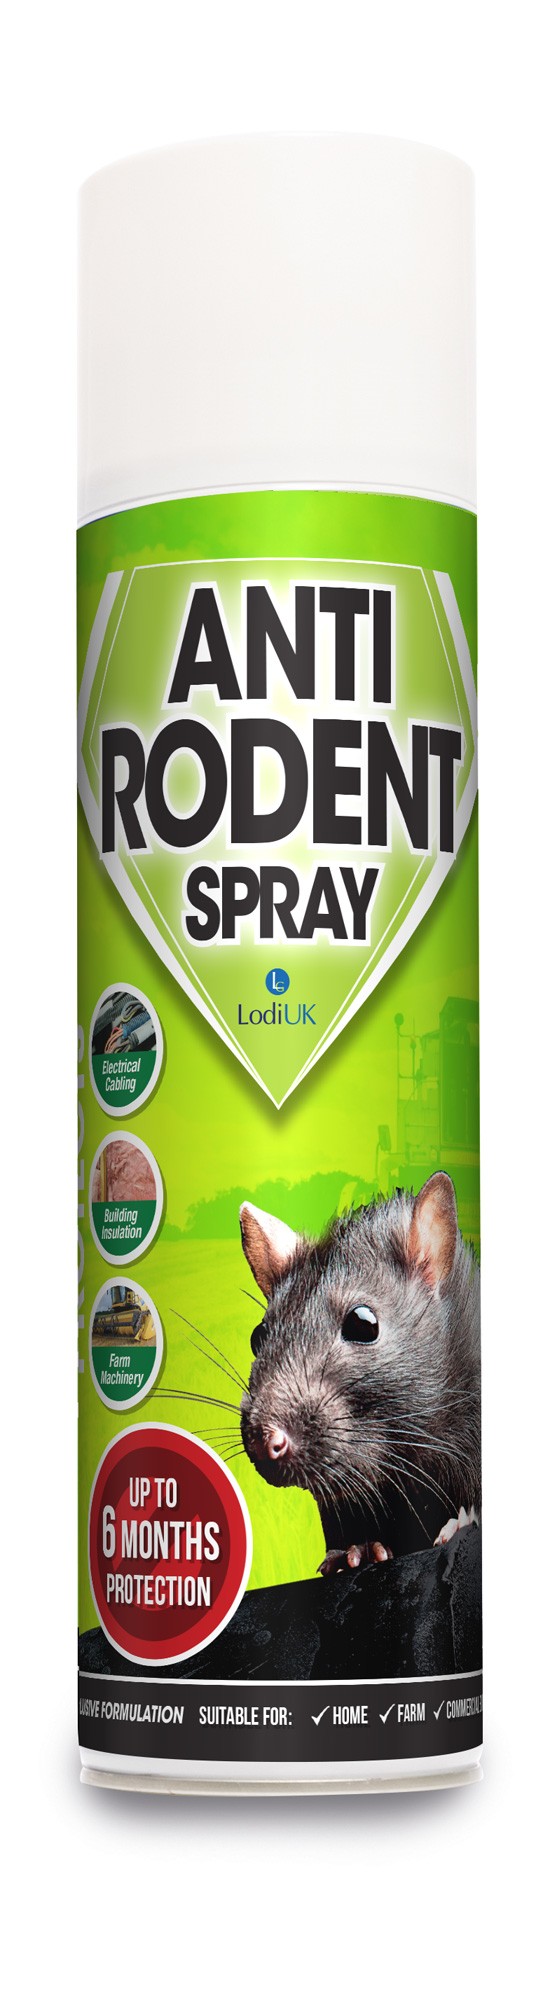 Anti Rodent Spray - Lodi UK